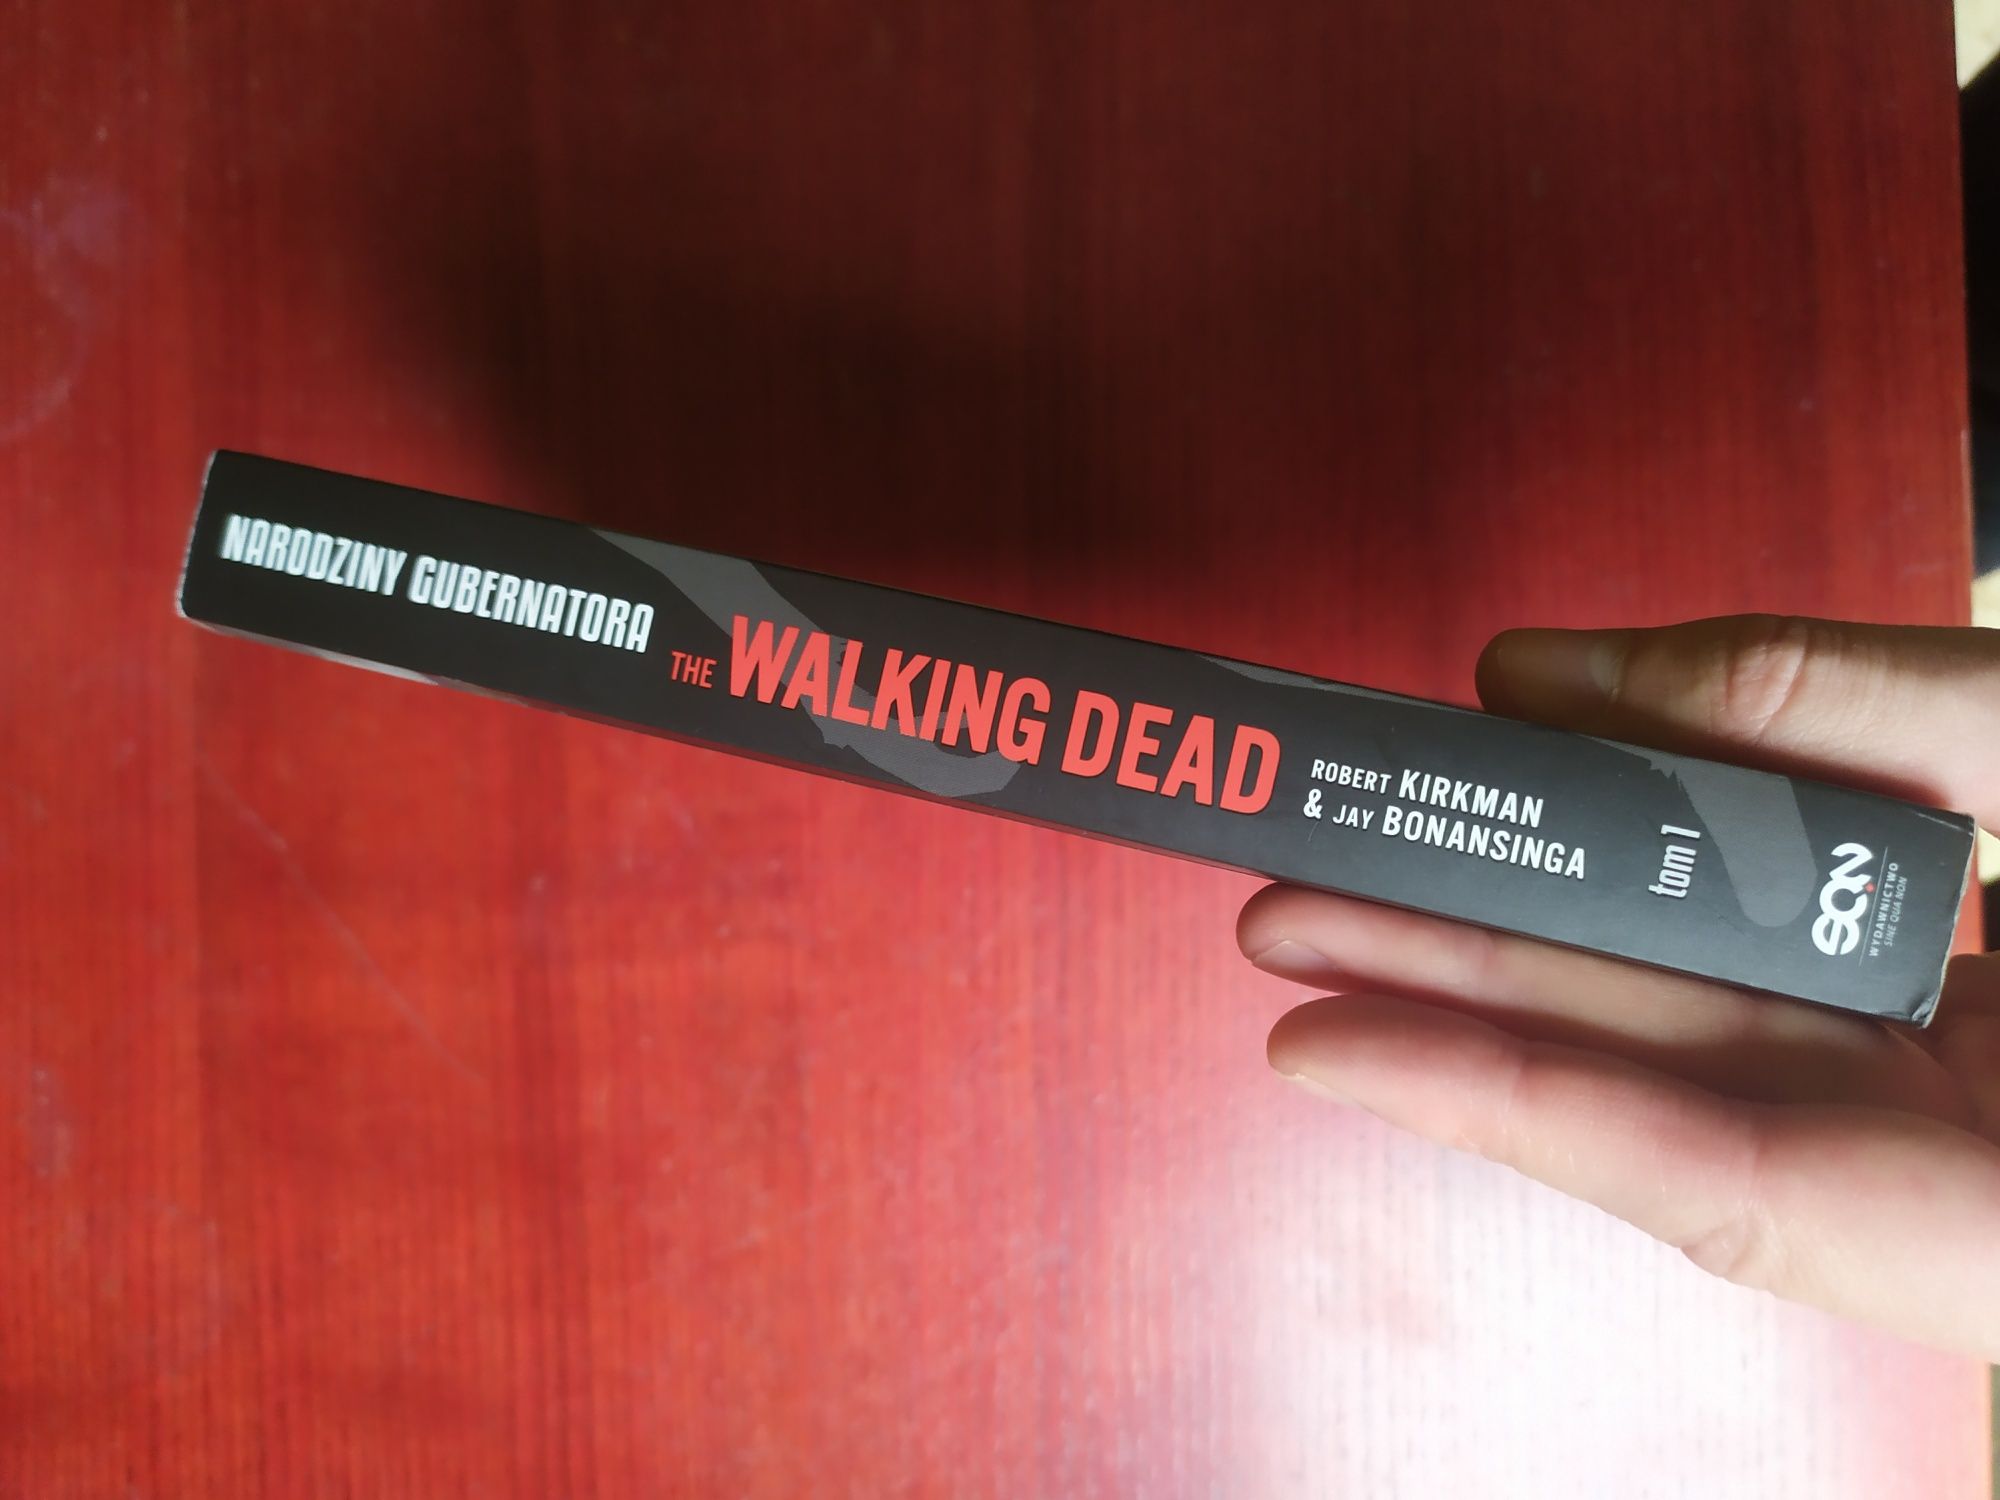 The walking dead Narodziny gubernatora książka.